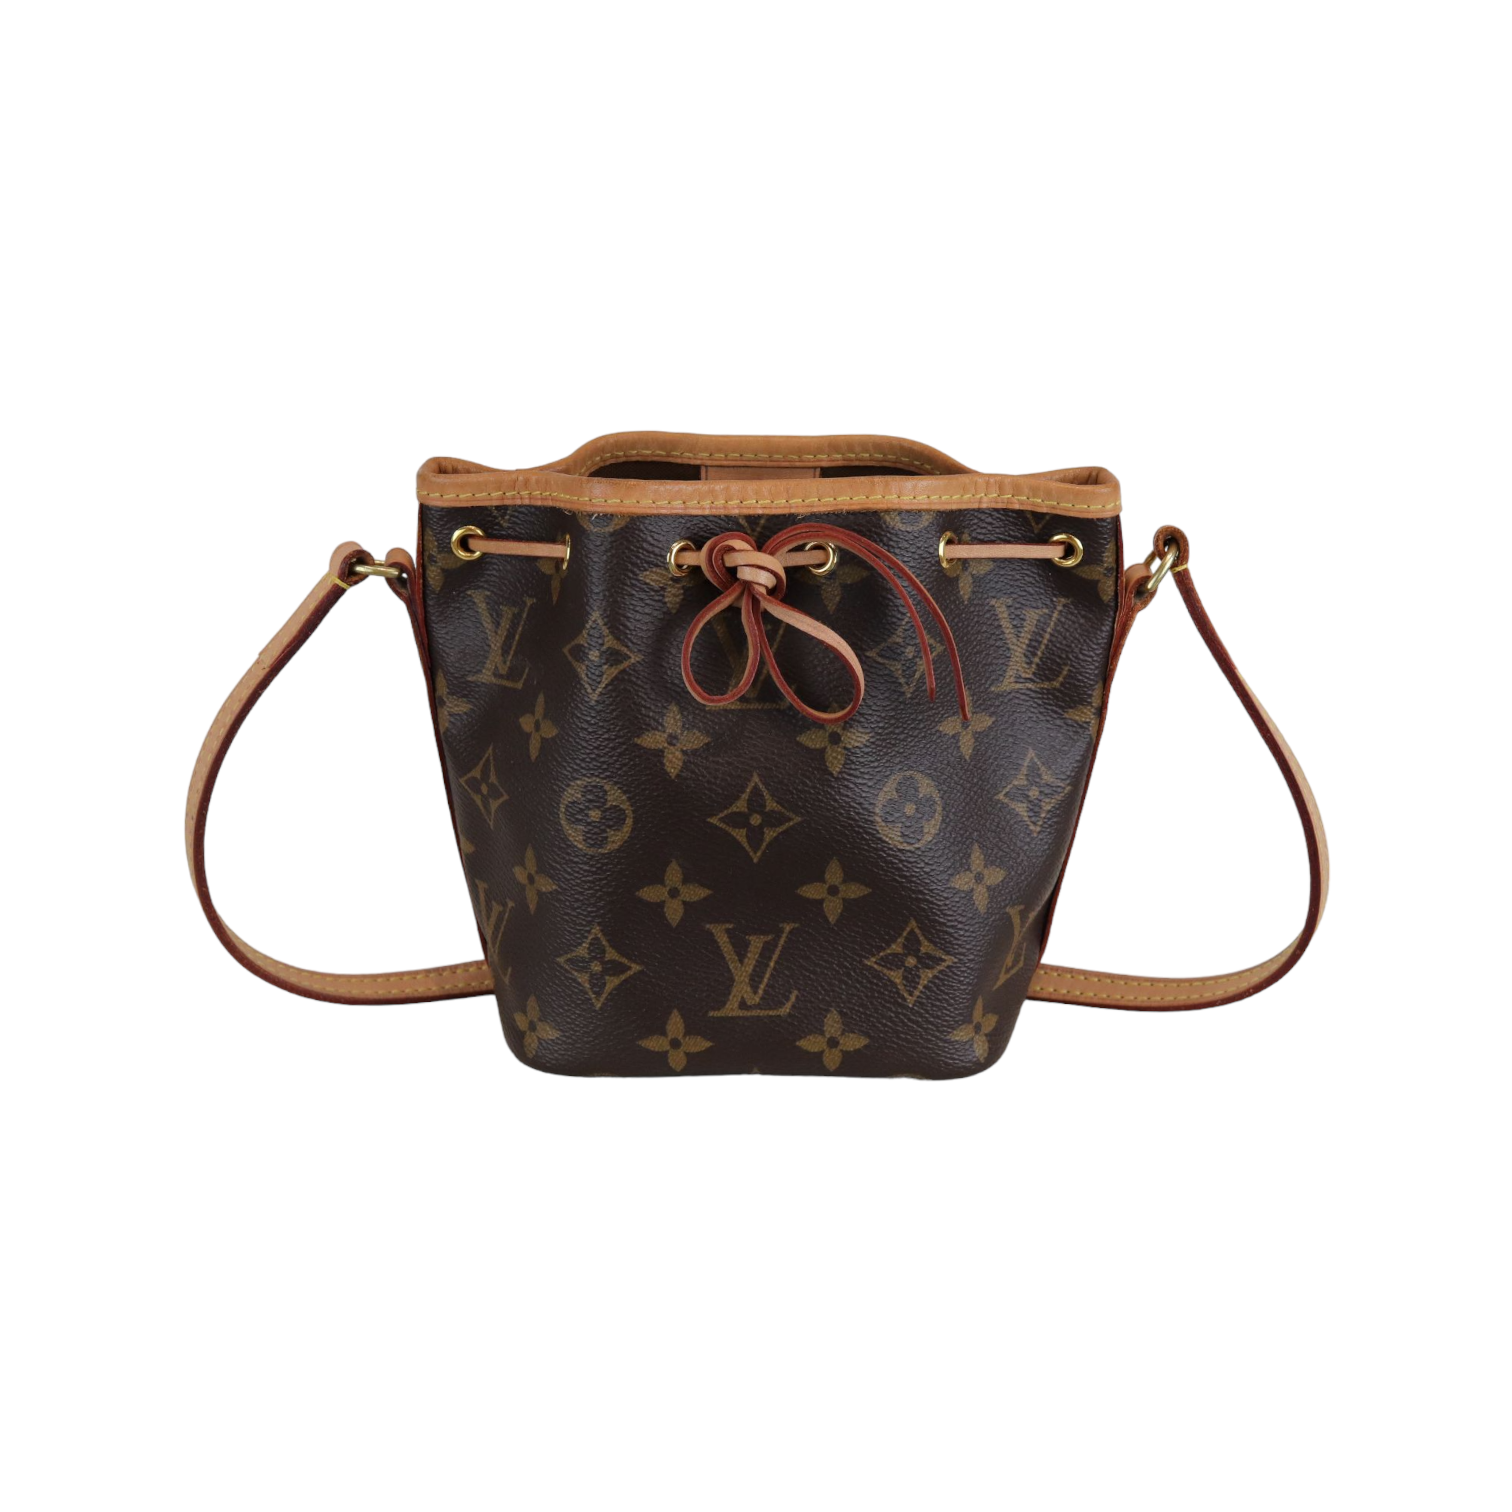 LOUIS VUITTON Micro Noe Bag Charm *New - Timeless Luxuries